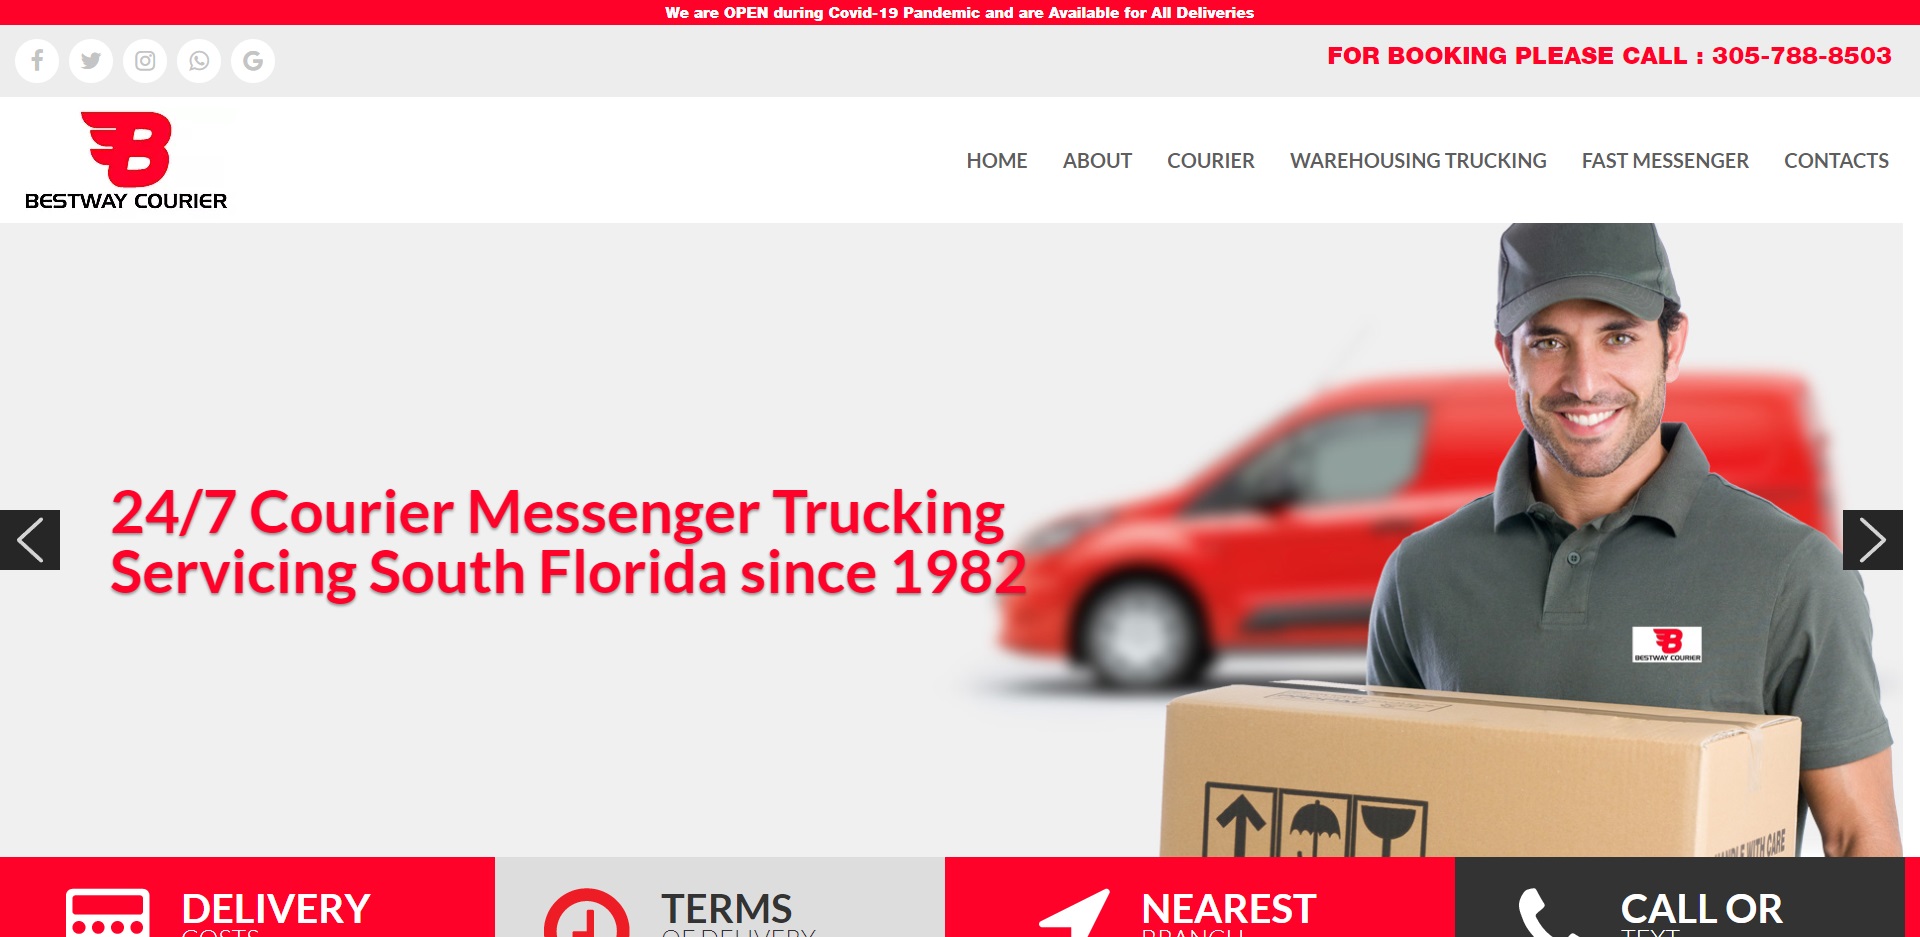 5 Best Courier Services in Miami, FL